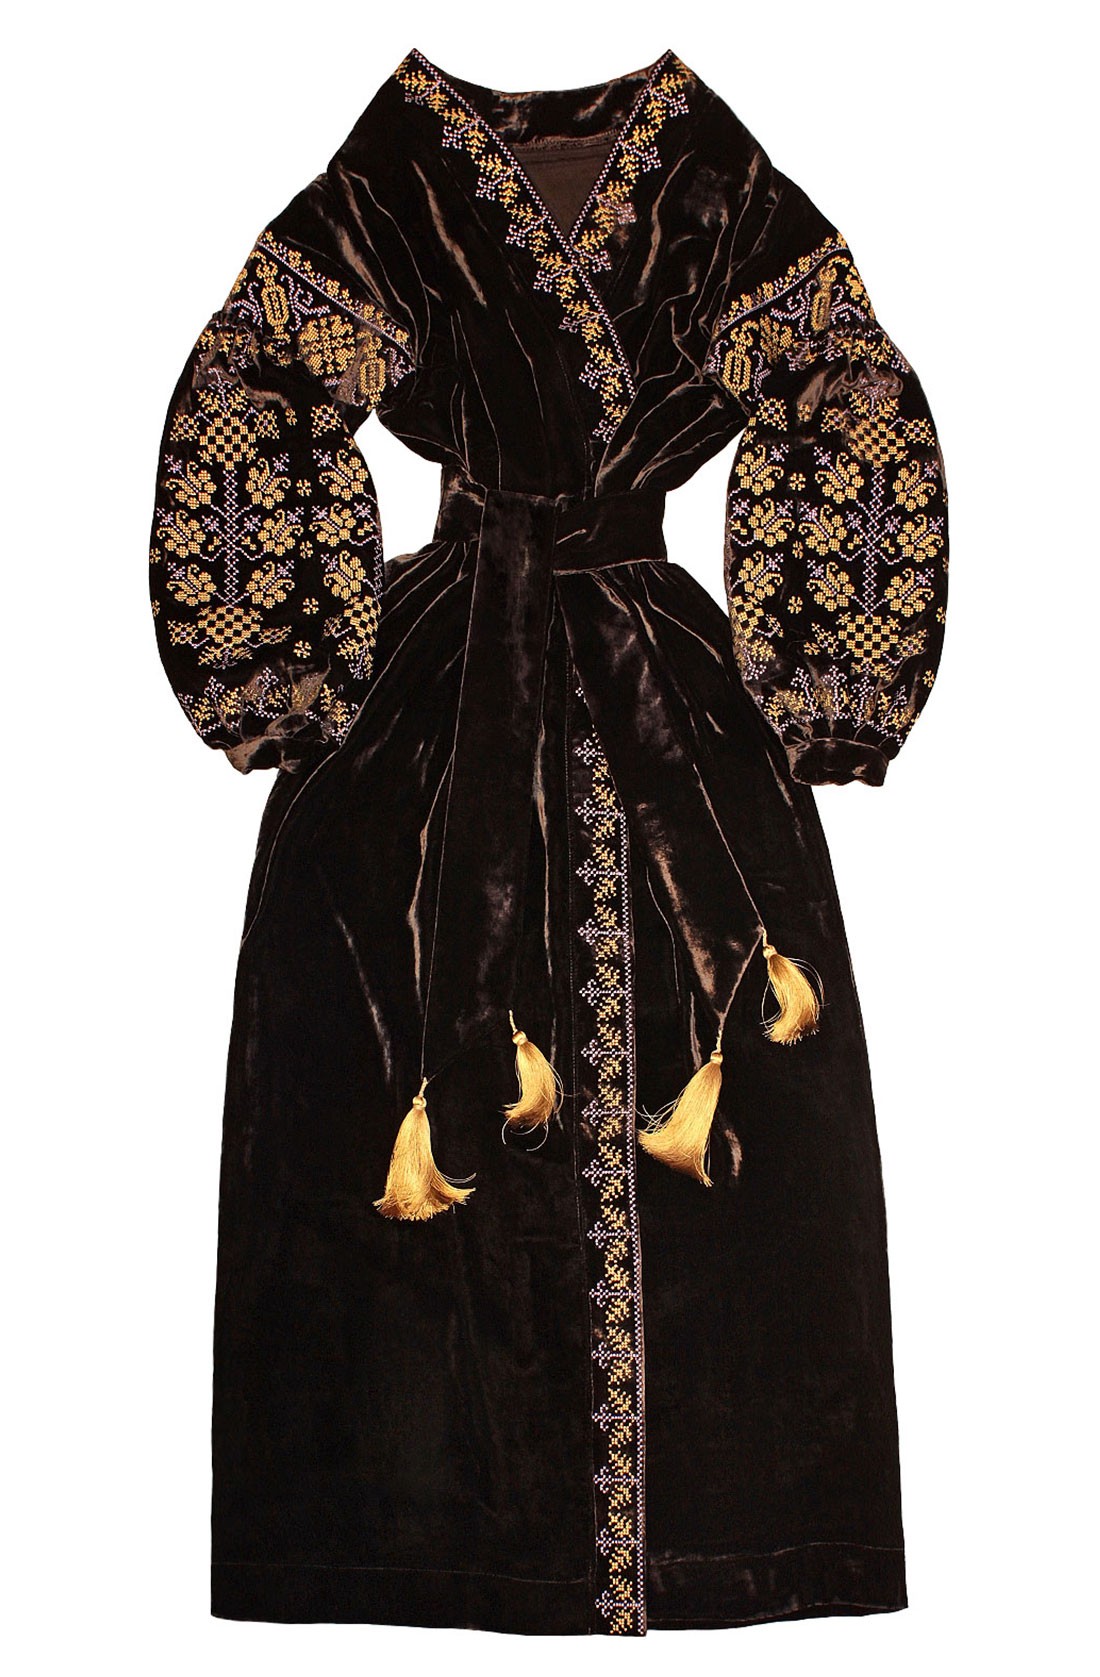 Buy Embroidered long velvet black dress, Ukrainian ethnic folk authentic unique dress